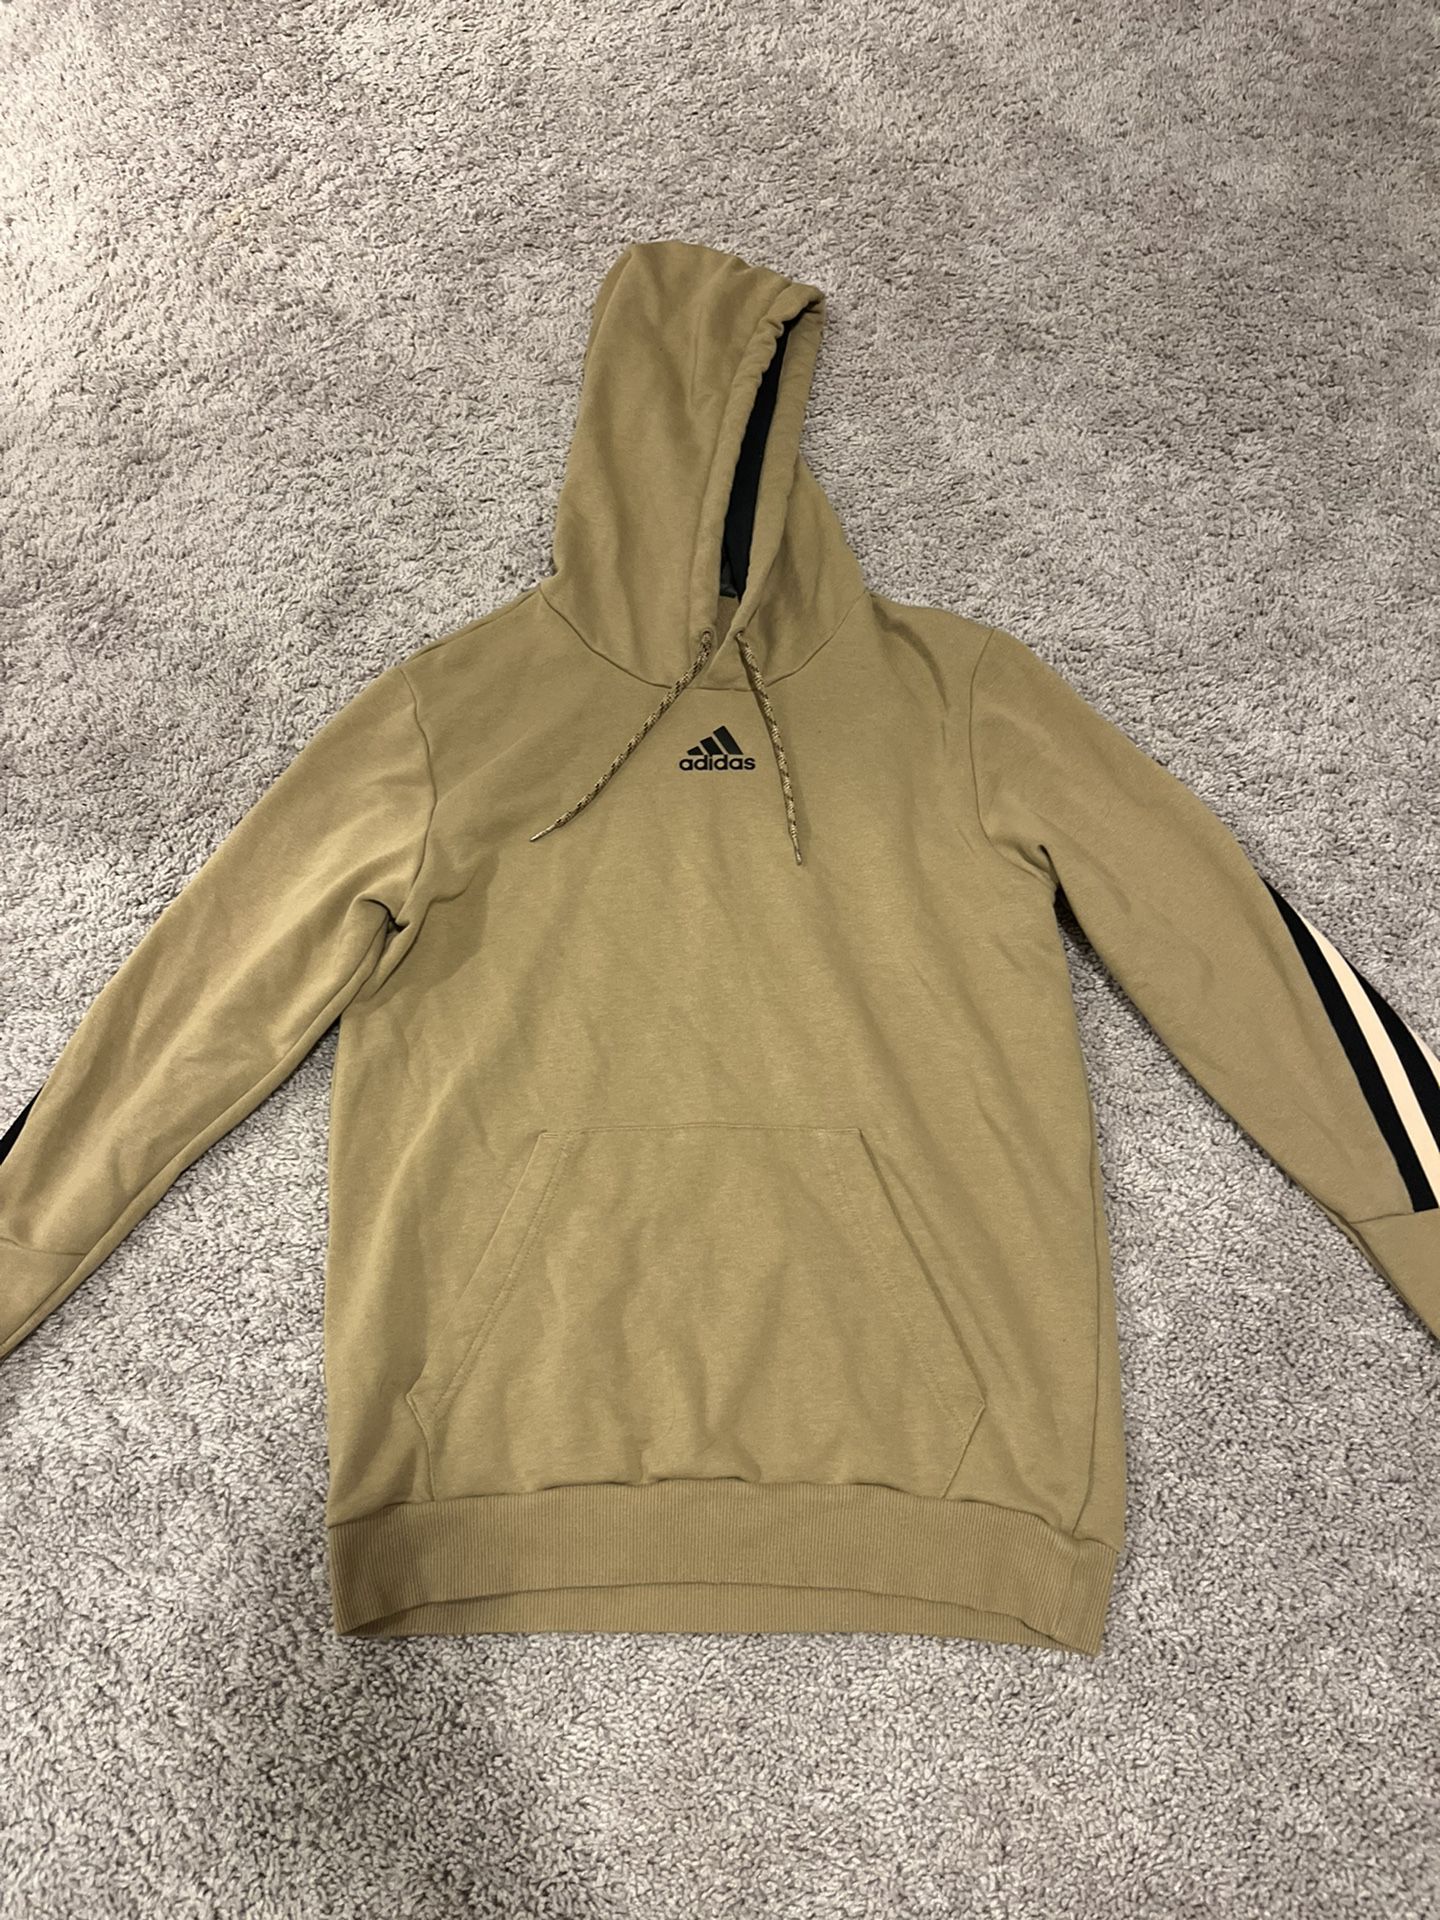 Adidas mocha hoodie 